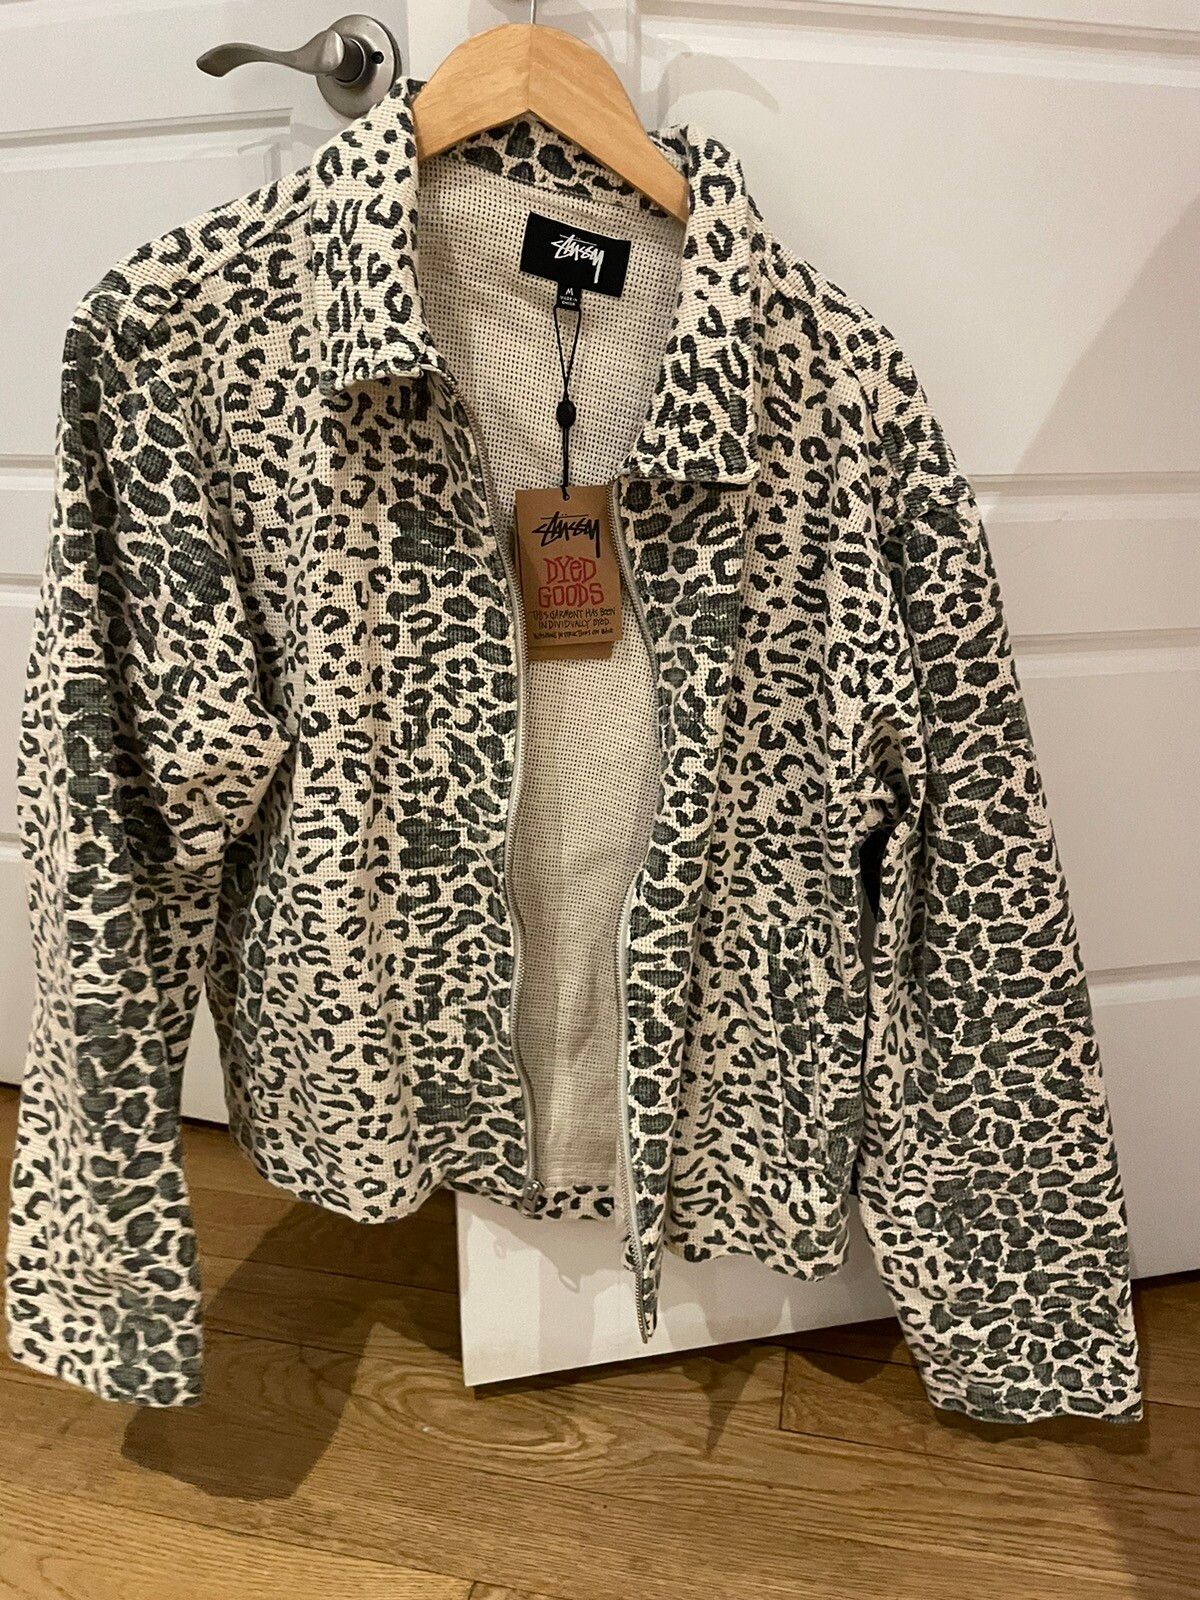 Stussy Stussy leopard mesh zip jacket | Grailed